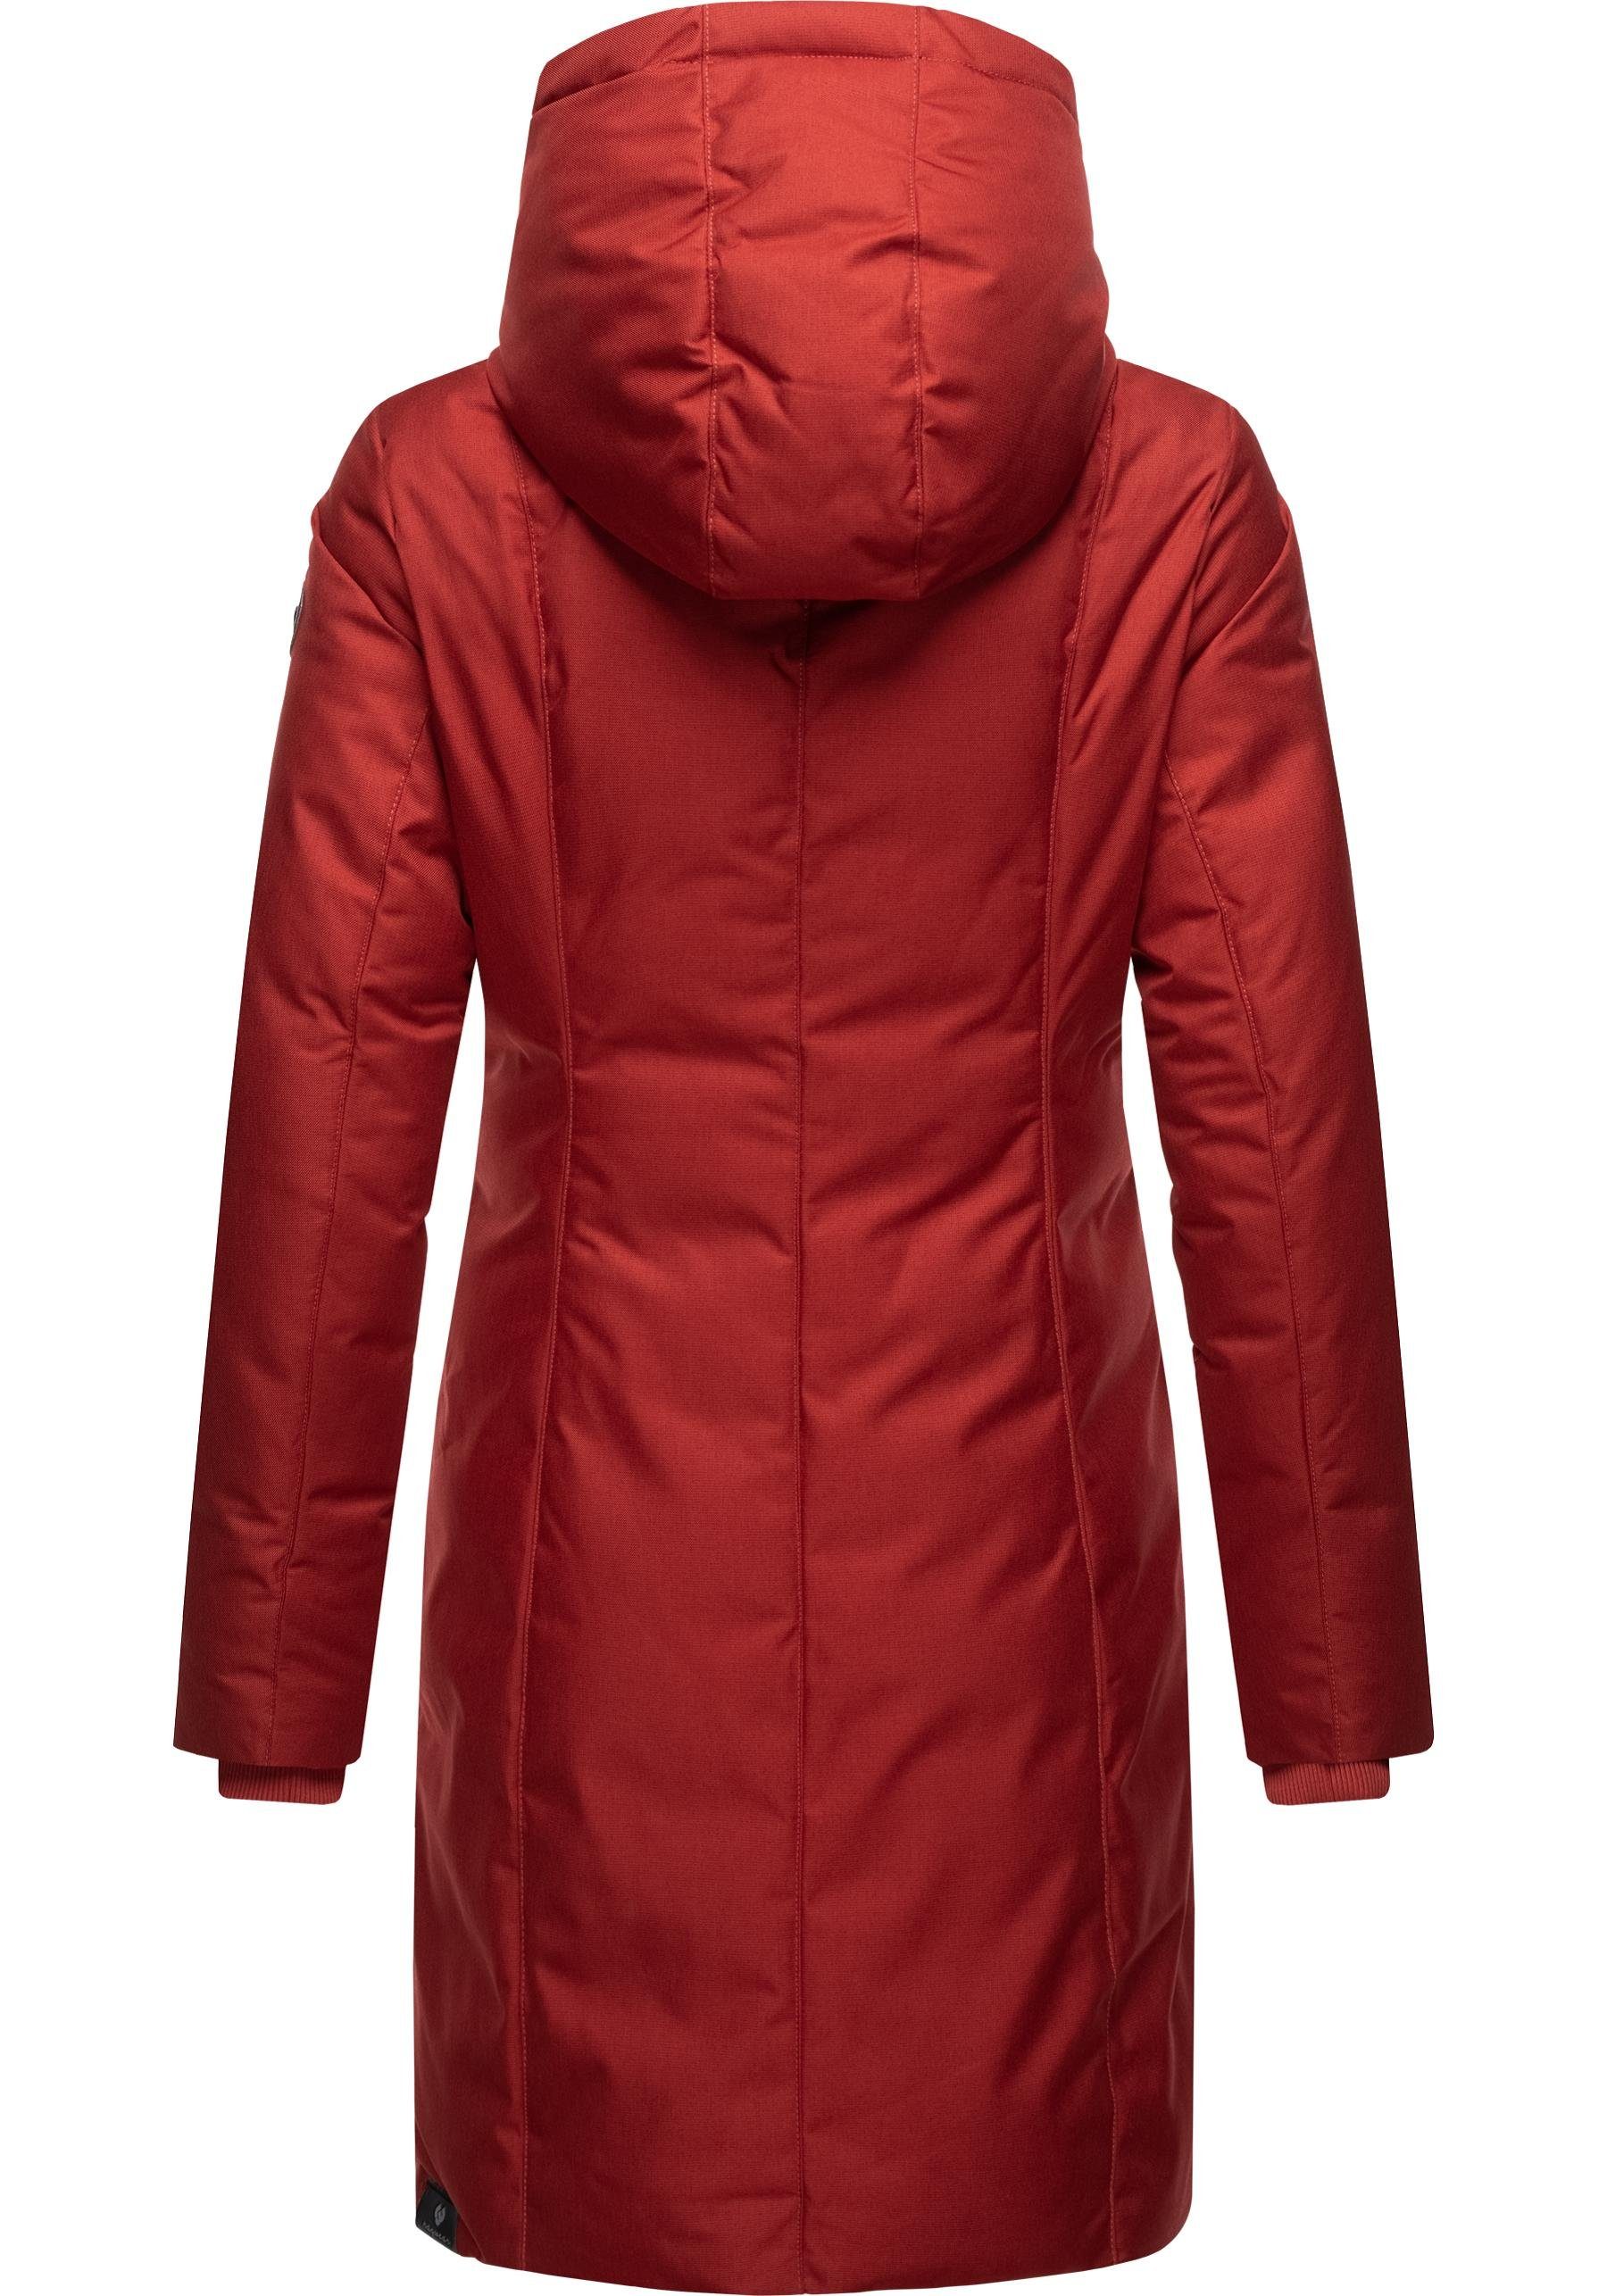 Winterparka mit Wintermantel Kapuze Ragwear stylischer großer rot Amarri